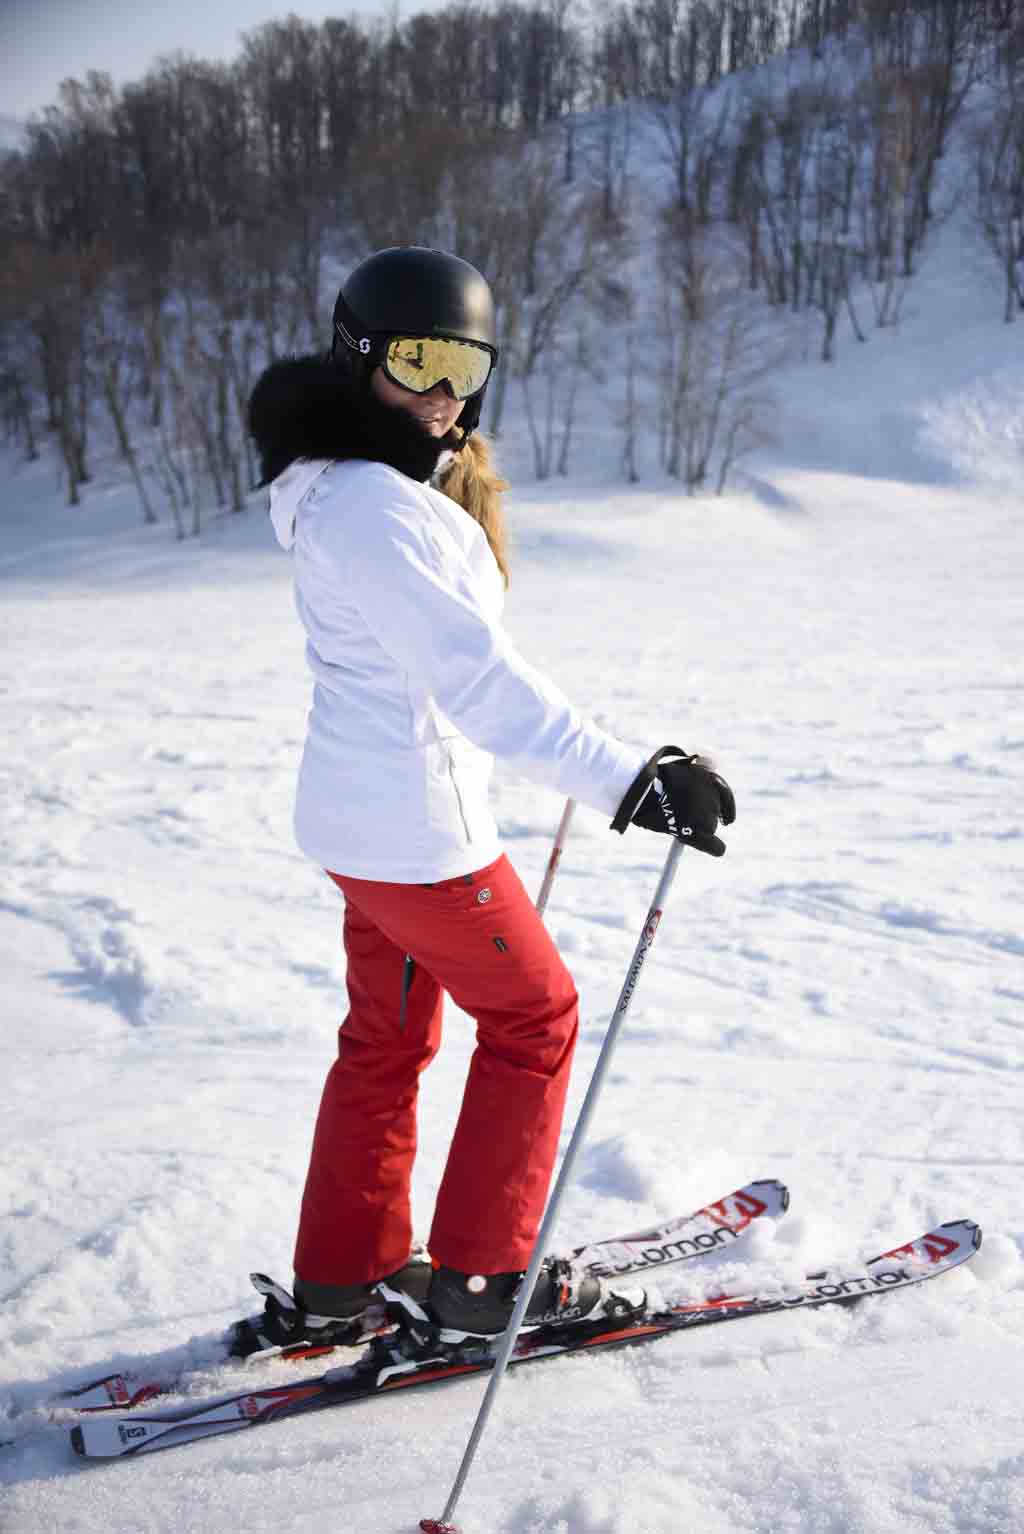 Z&X Ski Jacket Mountaineering Multicolor Waterproof Ski Suit Snow Suit Winter Skiing Keep Warm Womens Ski Jacket and Pants Set-Suitable for Snowboarding